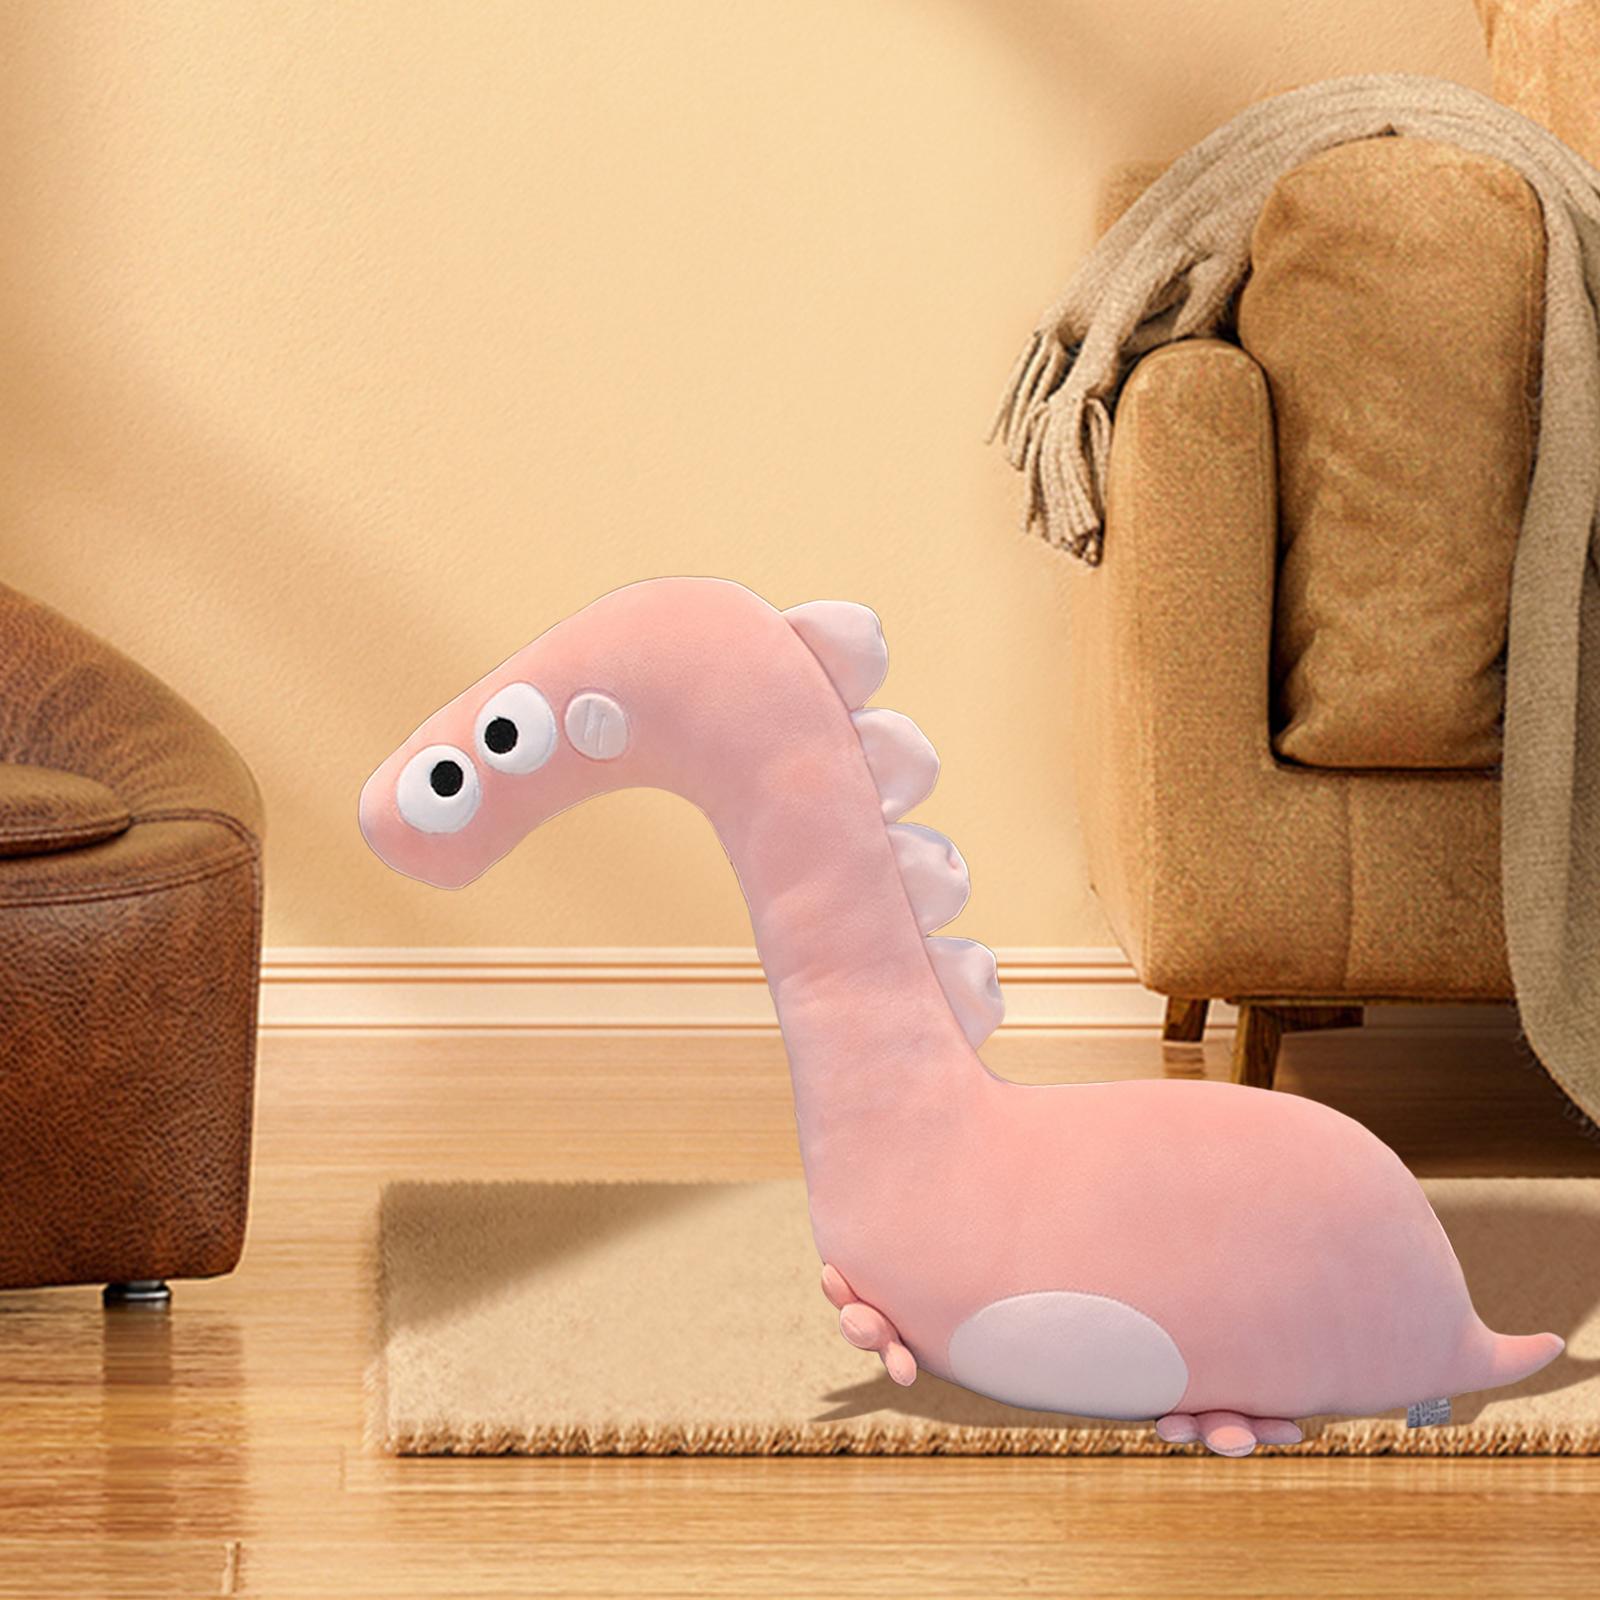 Cute Plush Toy Kids Adult Kawaii Cushion Stuffed Doll Decor pink Dinosaur